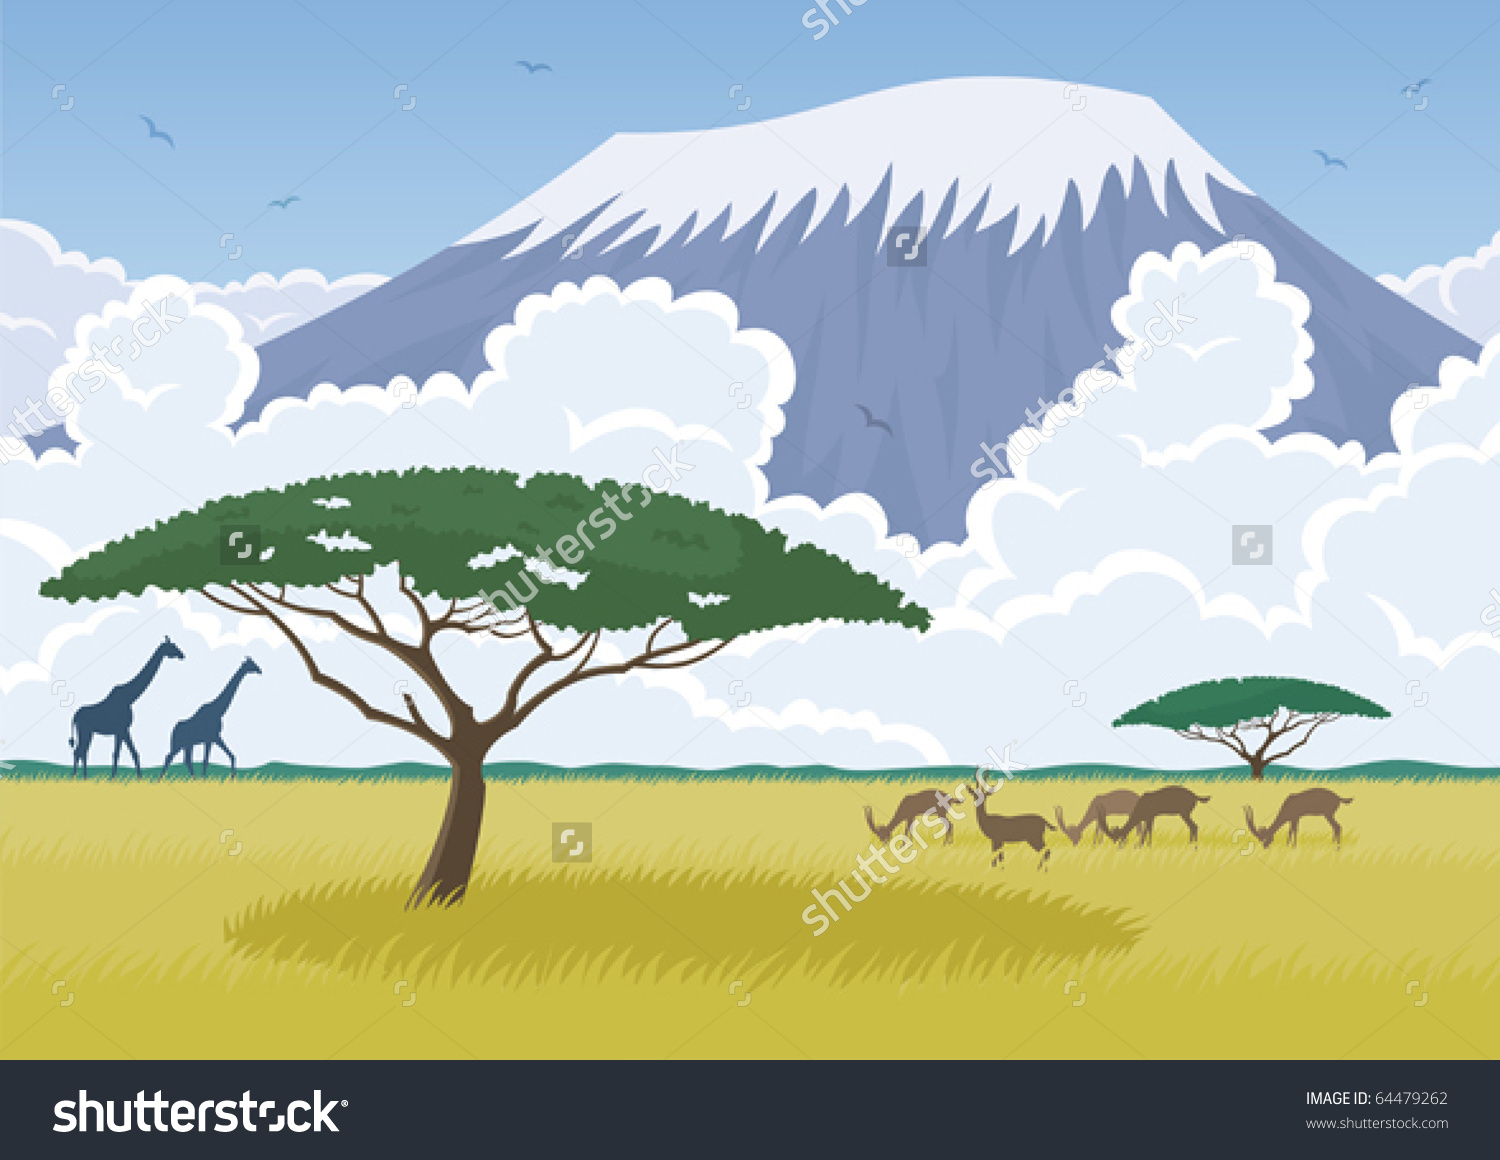 Kilimanjaro clipart #13, Download drawings